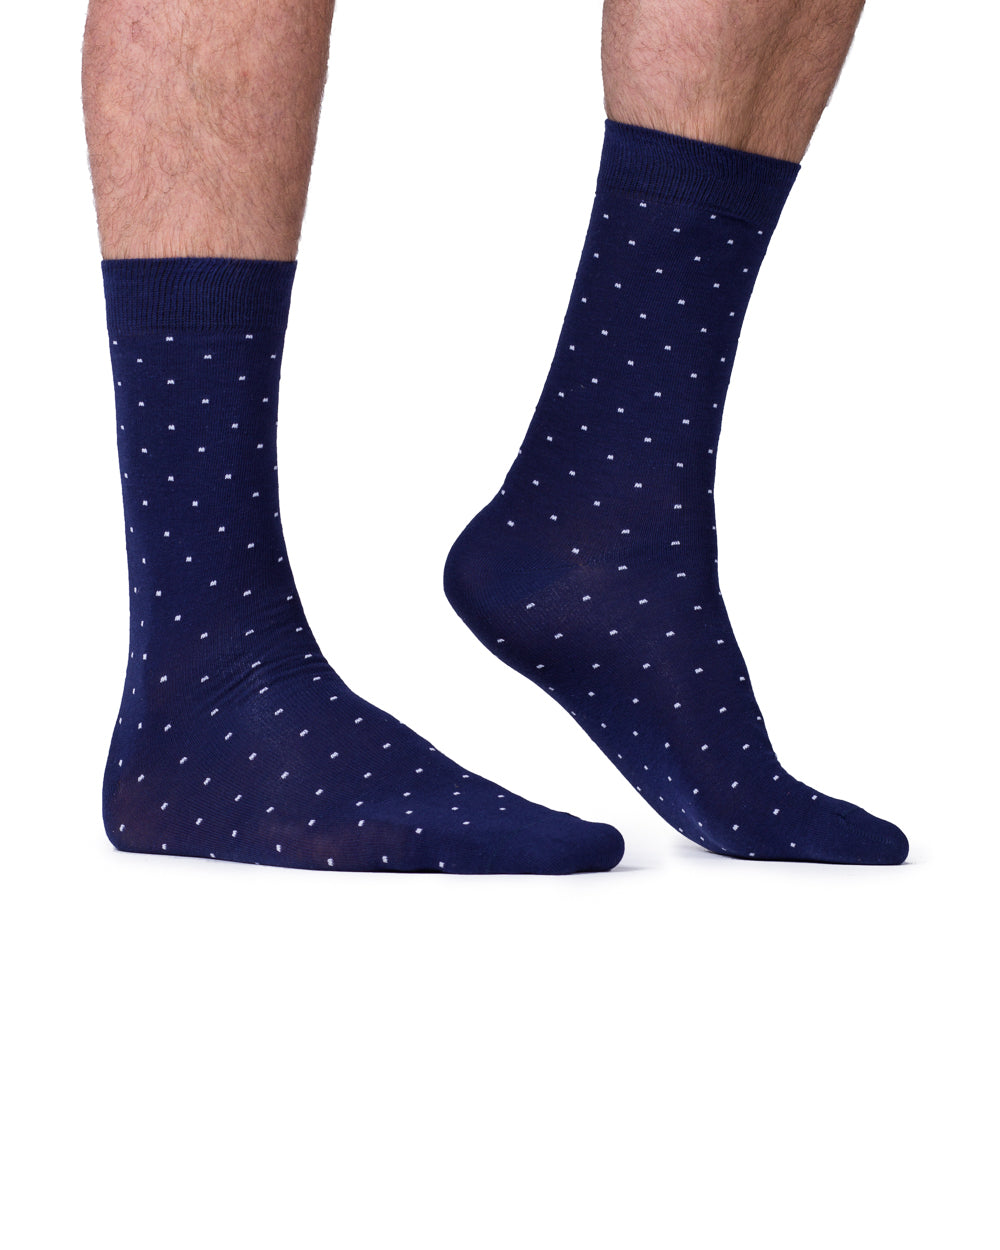 2t Patterned Socks 2 Pairs (mixed navy)